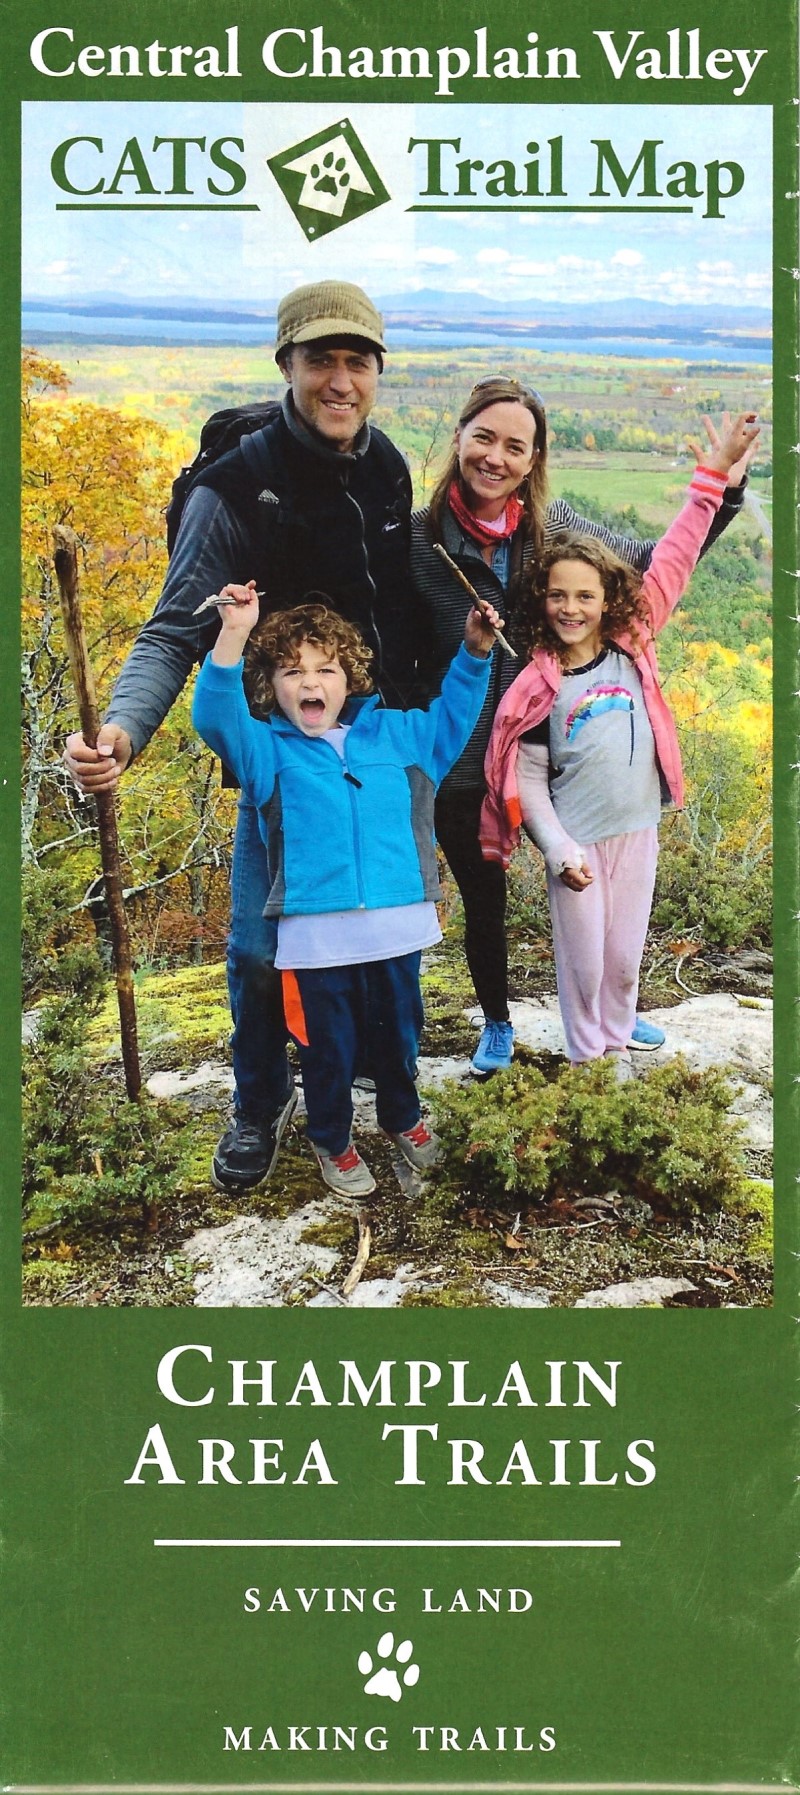 Champlain Area Trails Central Champlain Valley brochure thumbnail